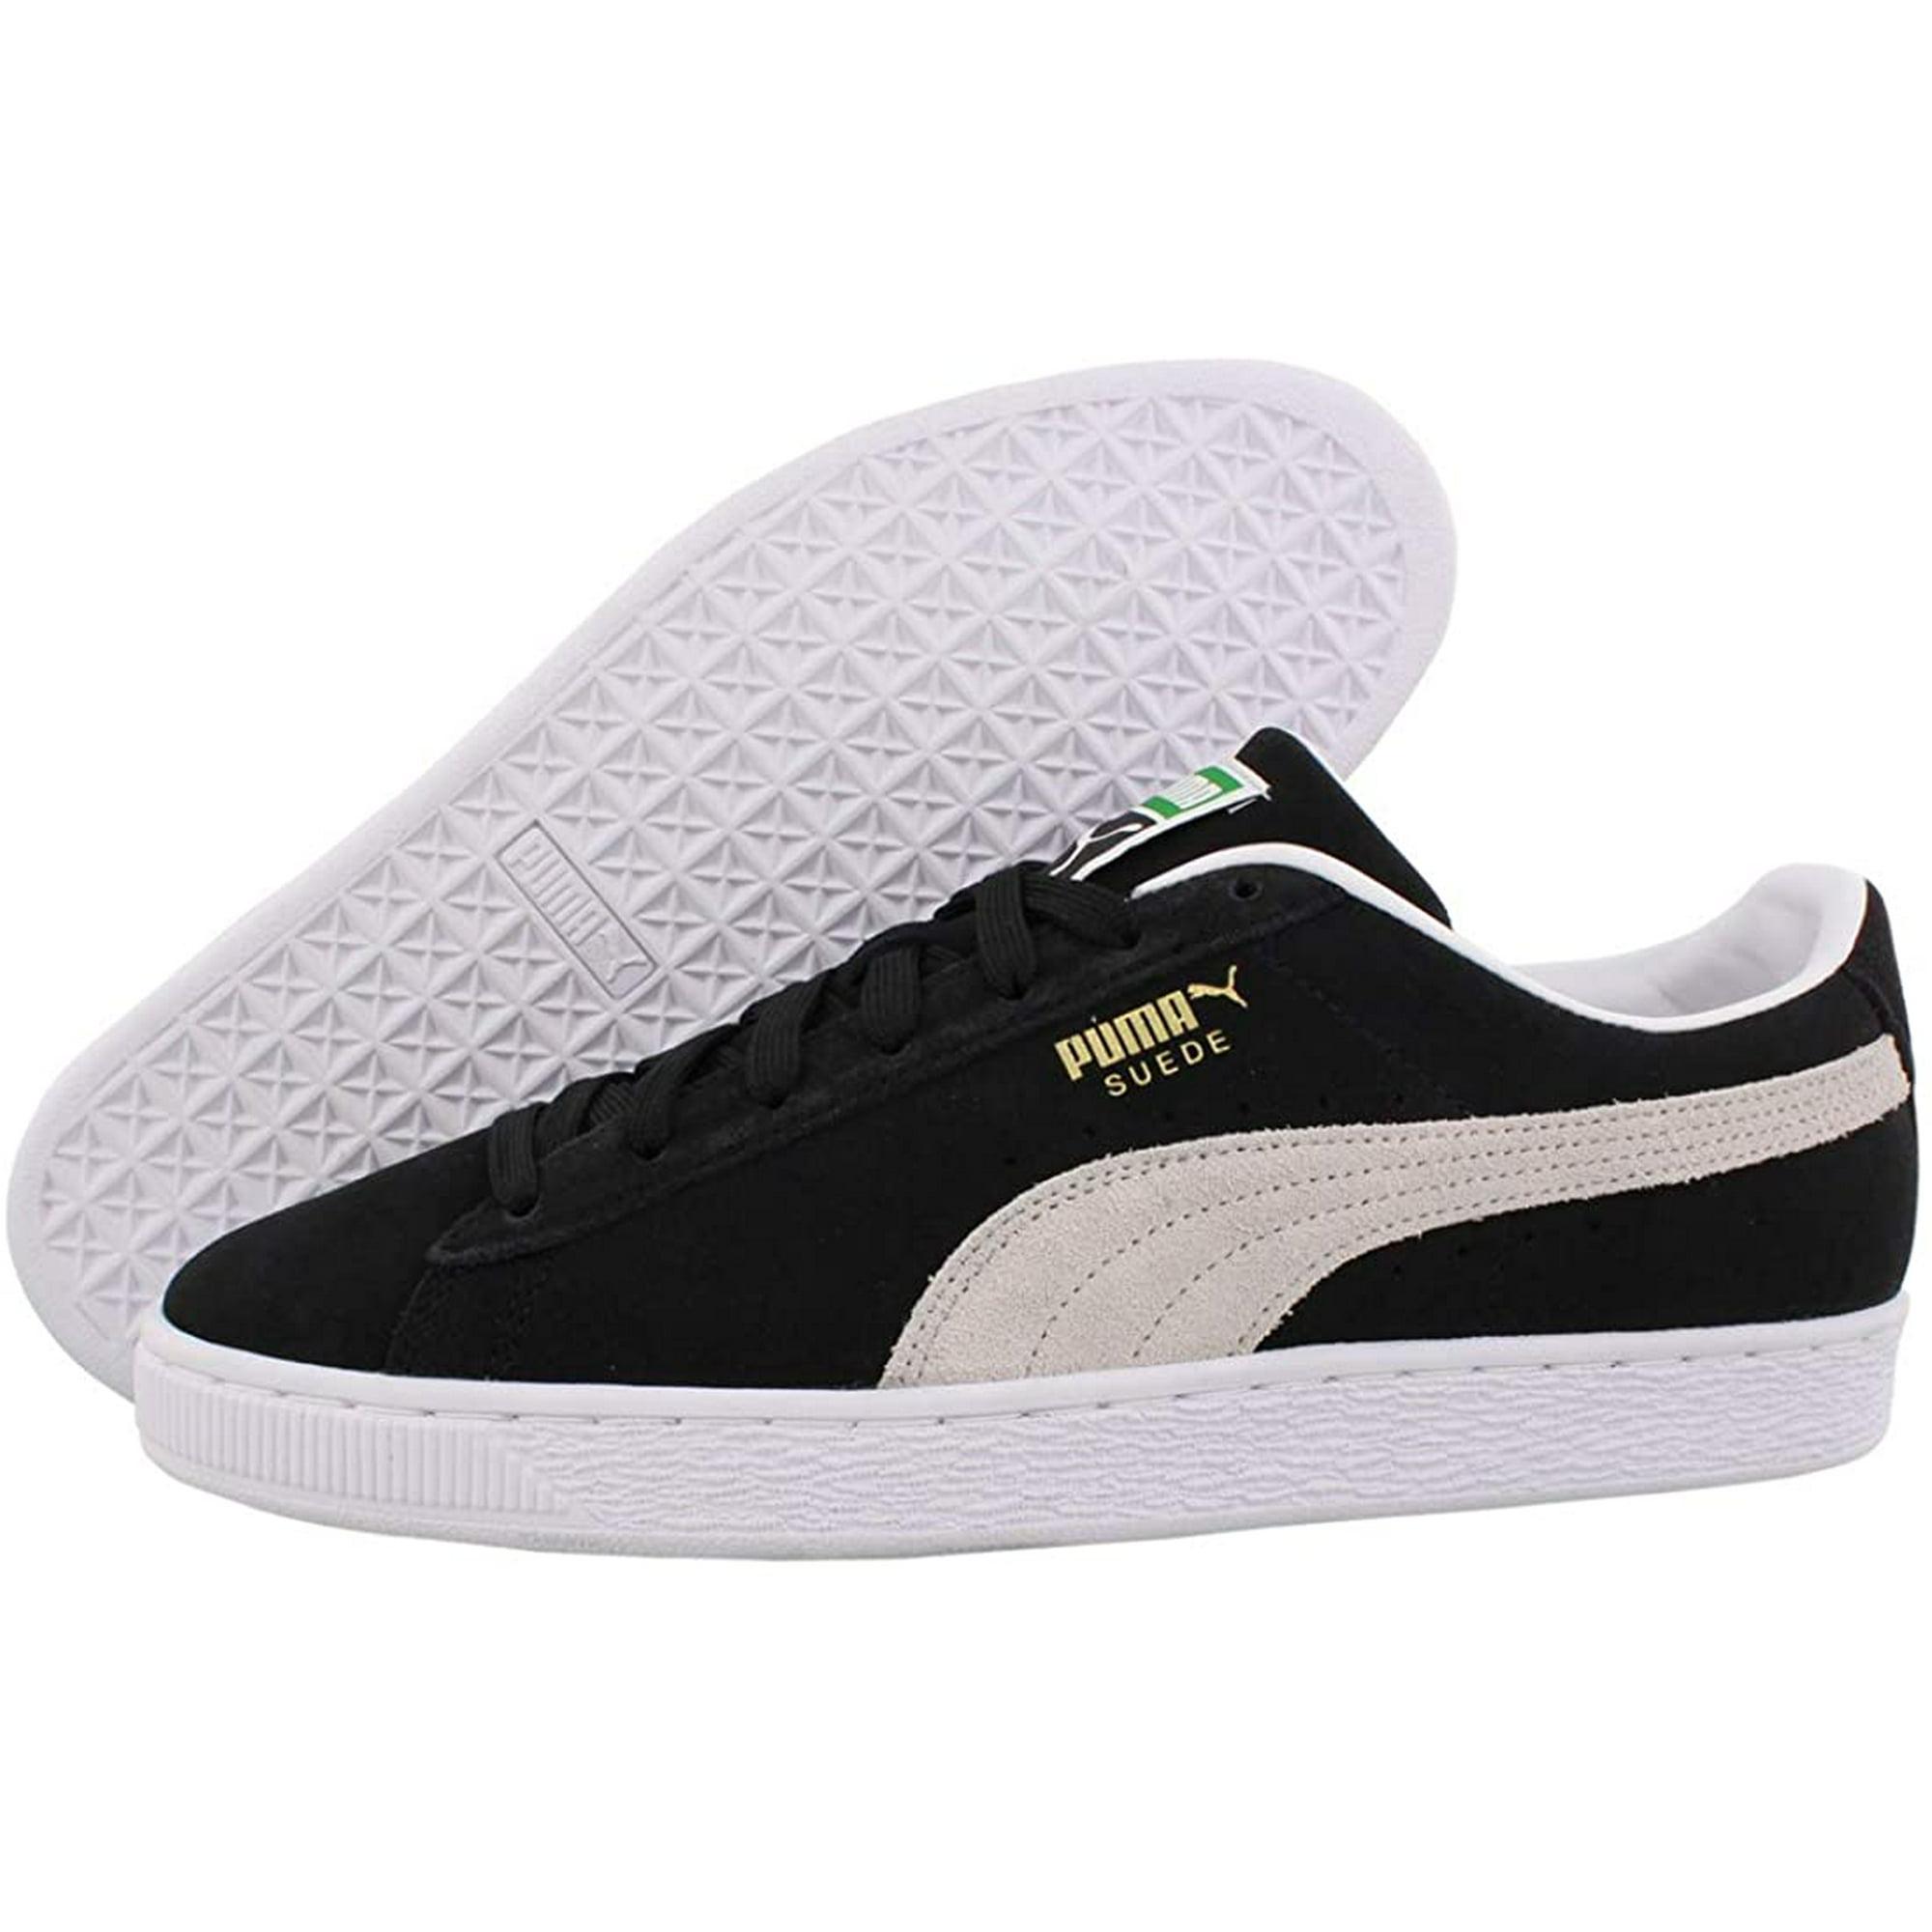 Mens Suede XXI Sneakers - Black/White - US - Walmart.com